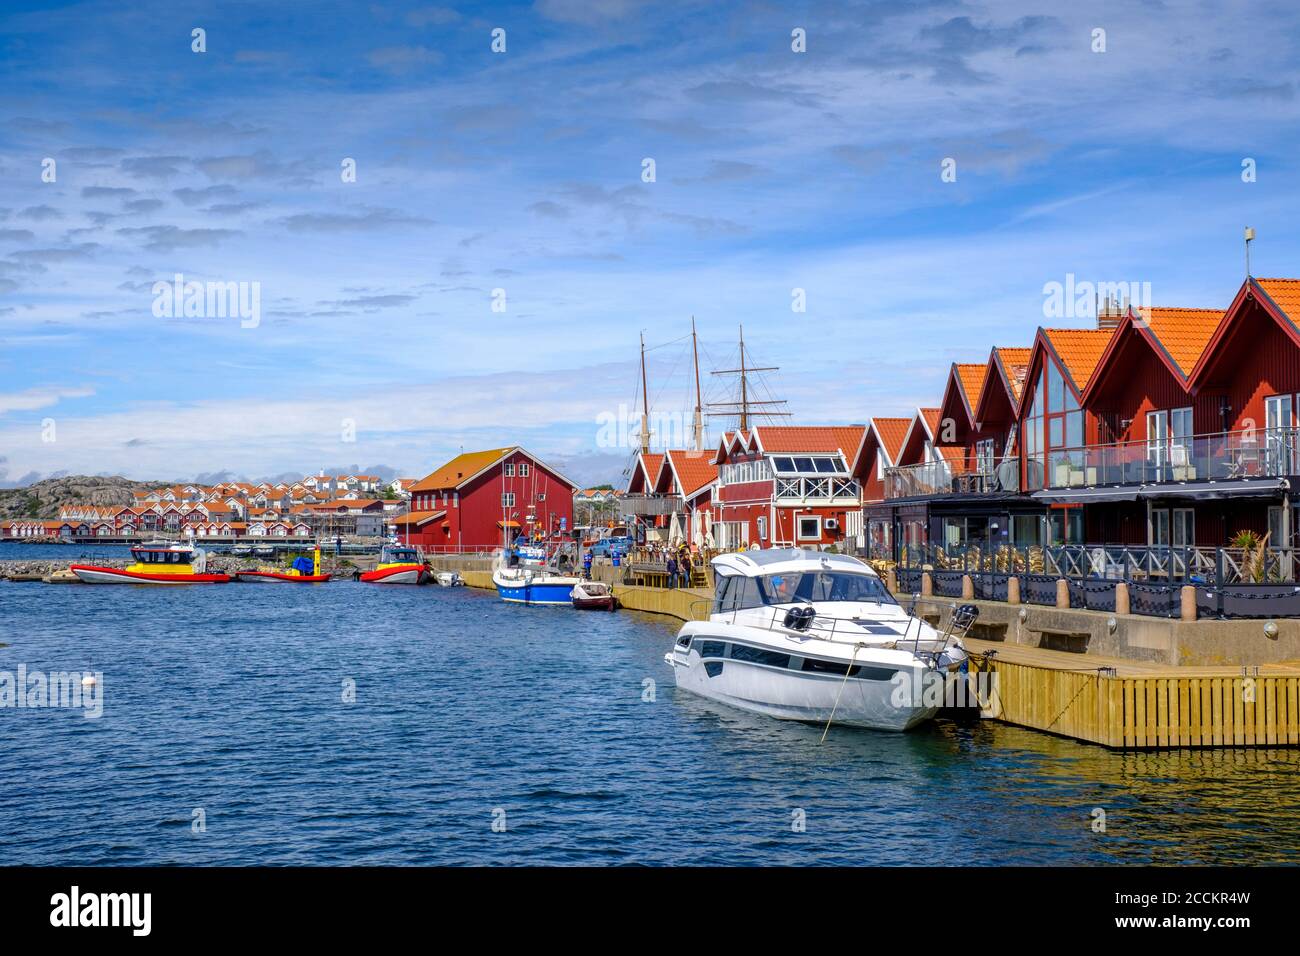 Sweden, Vastra Gotaland County, Skarhamn, Marina of coastal town Stock Photo